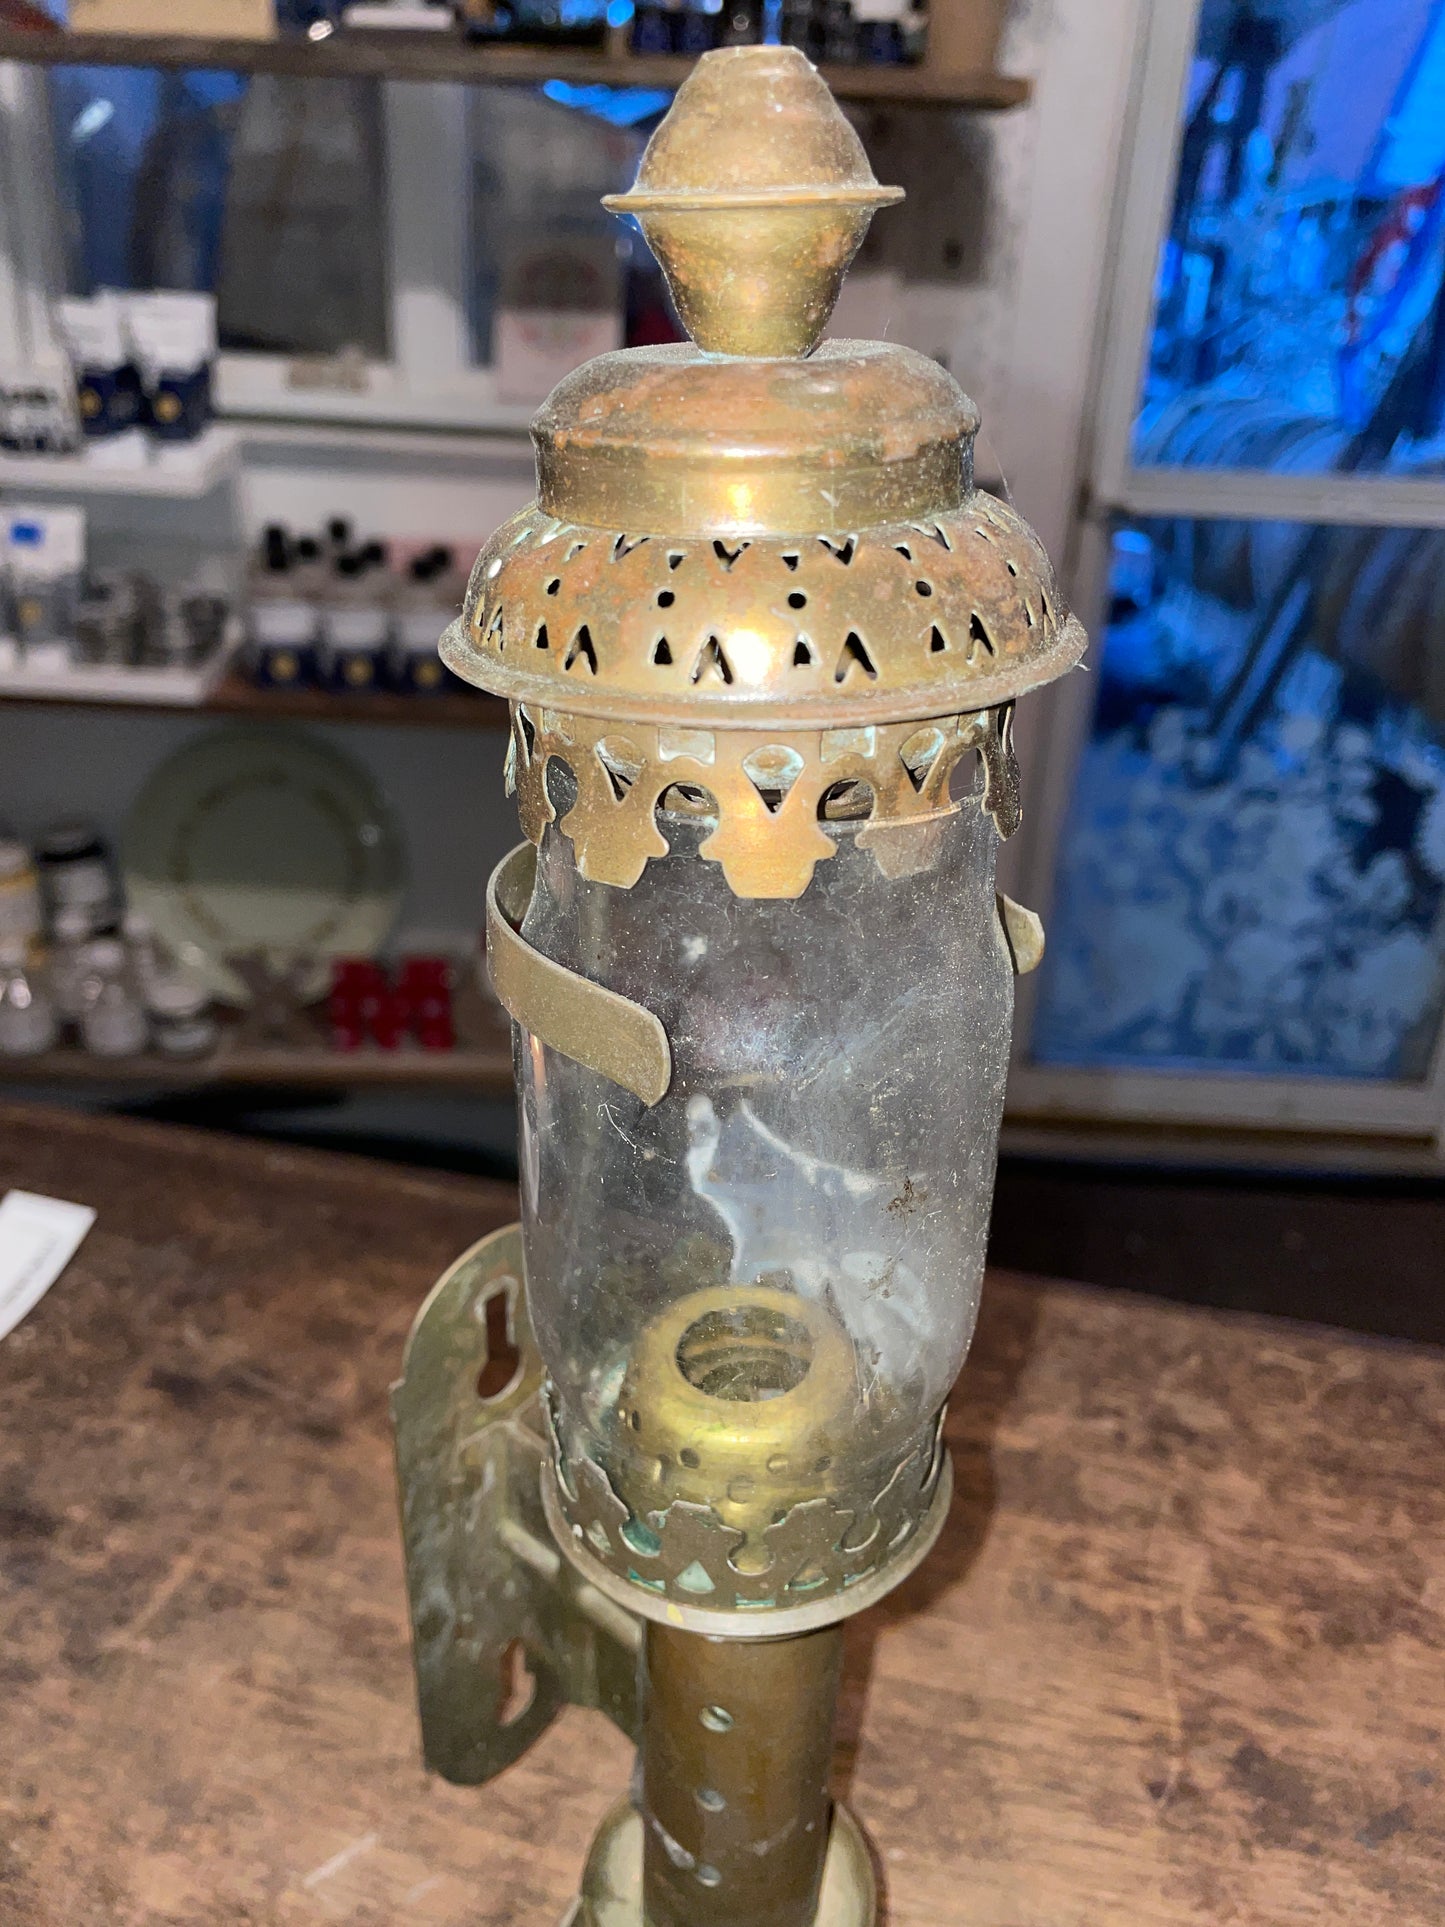 Vintage Brass Oil Lamp Wall Mount Handheld Light